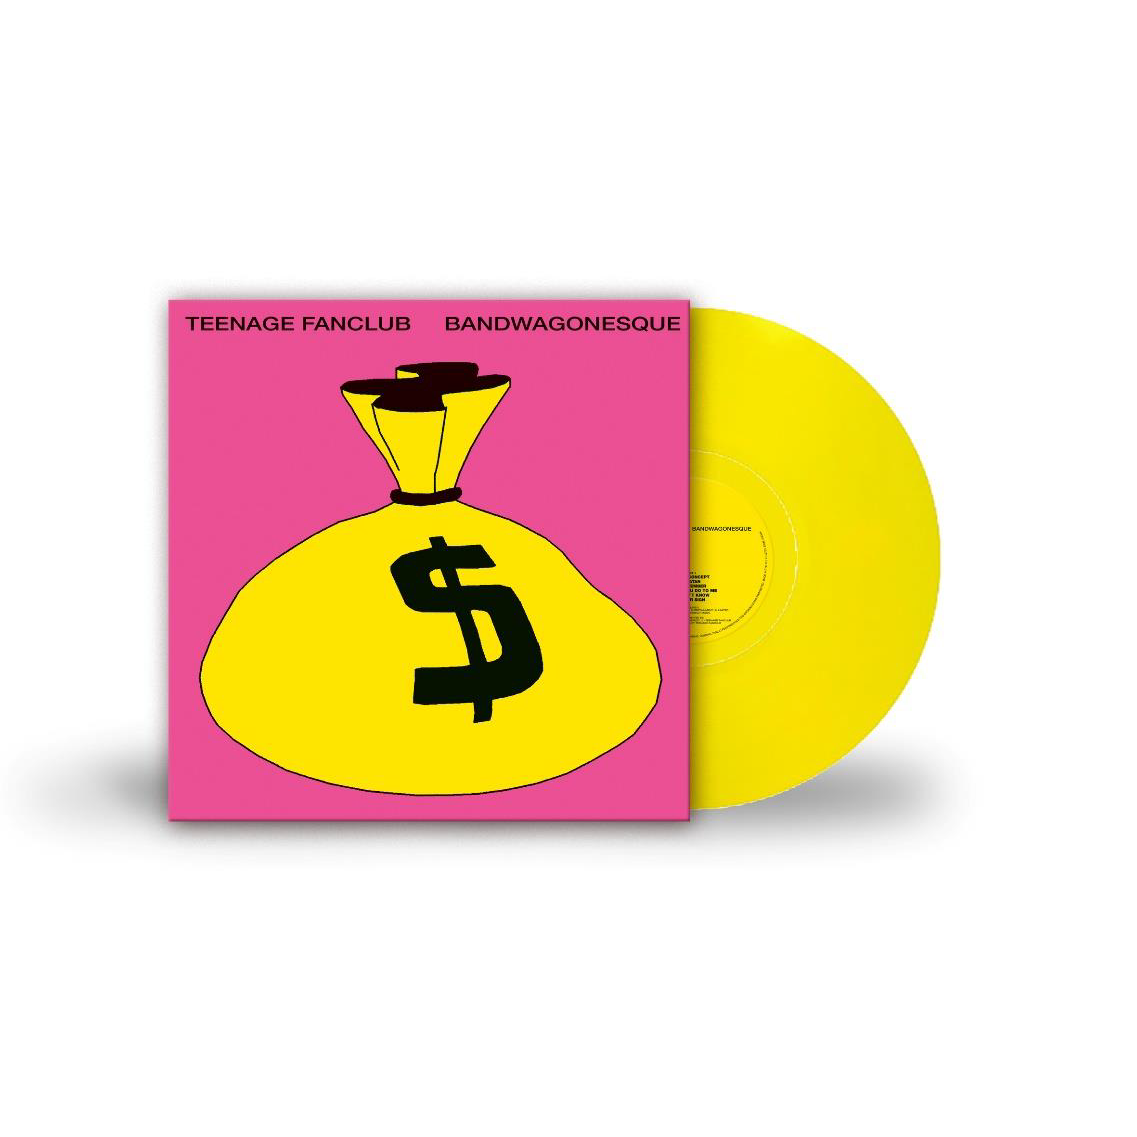 Teenage Fanclub - Bandwagonesque: Limited Transparent Yellow Vinyl LP [NAD23]